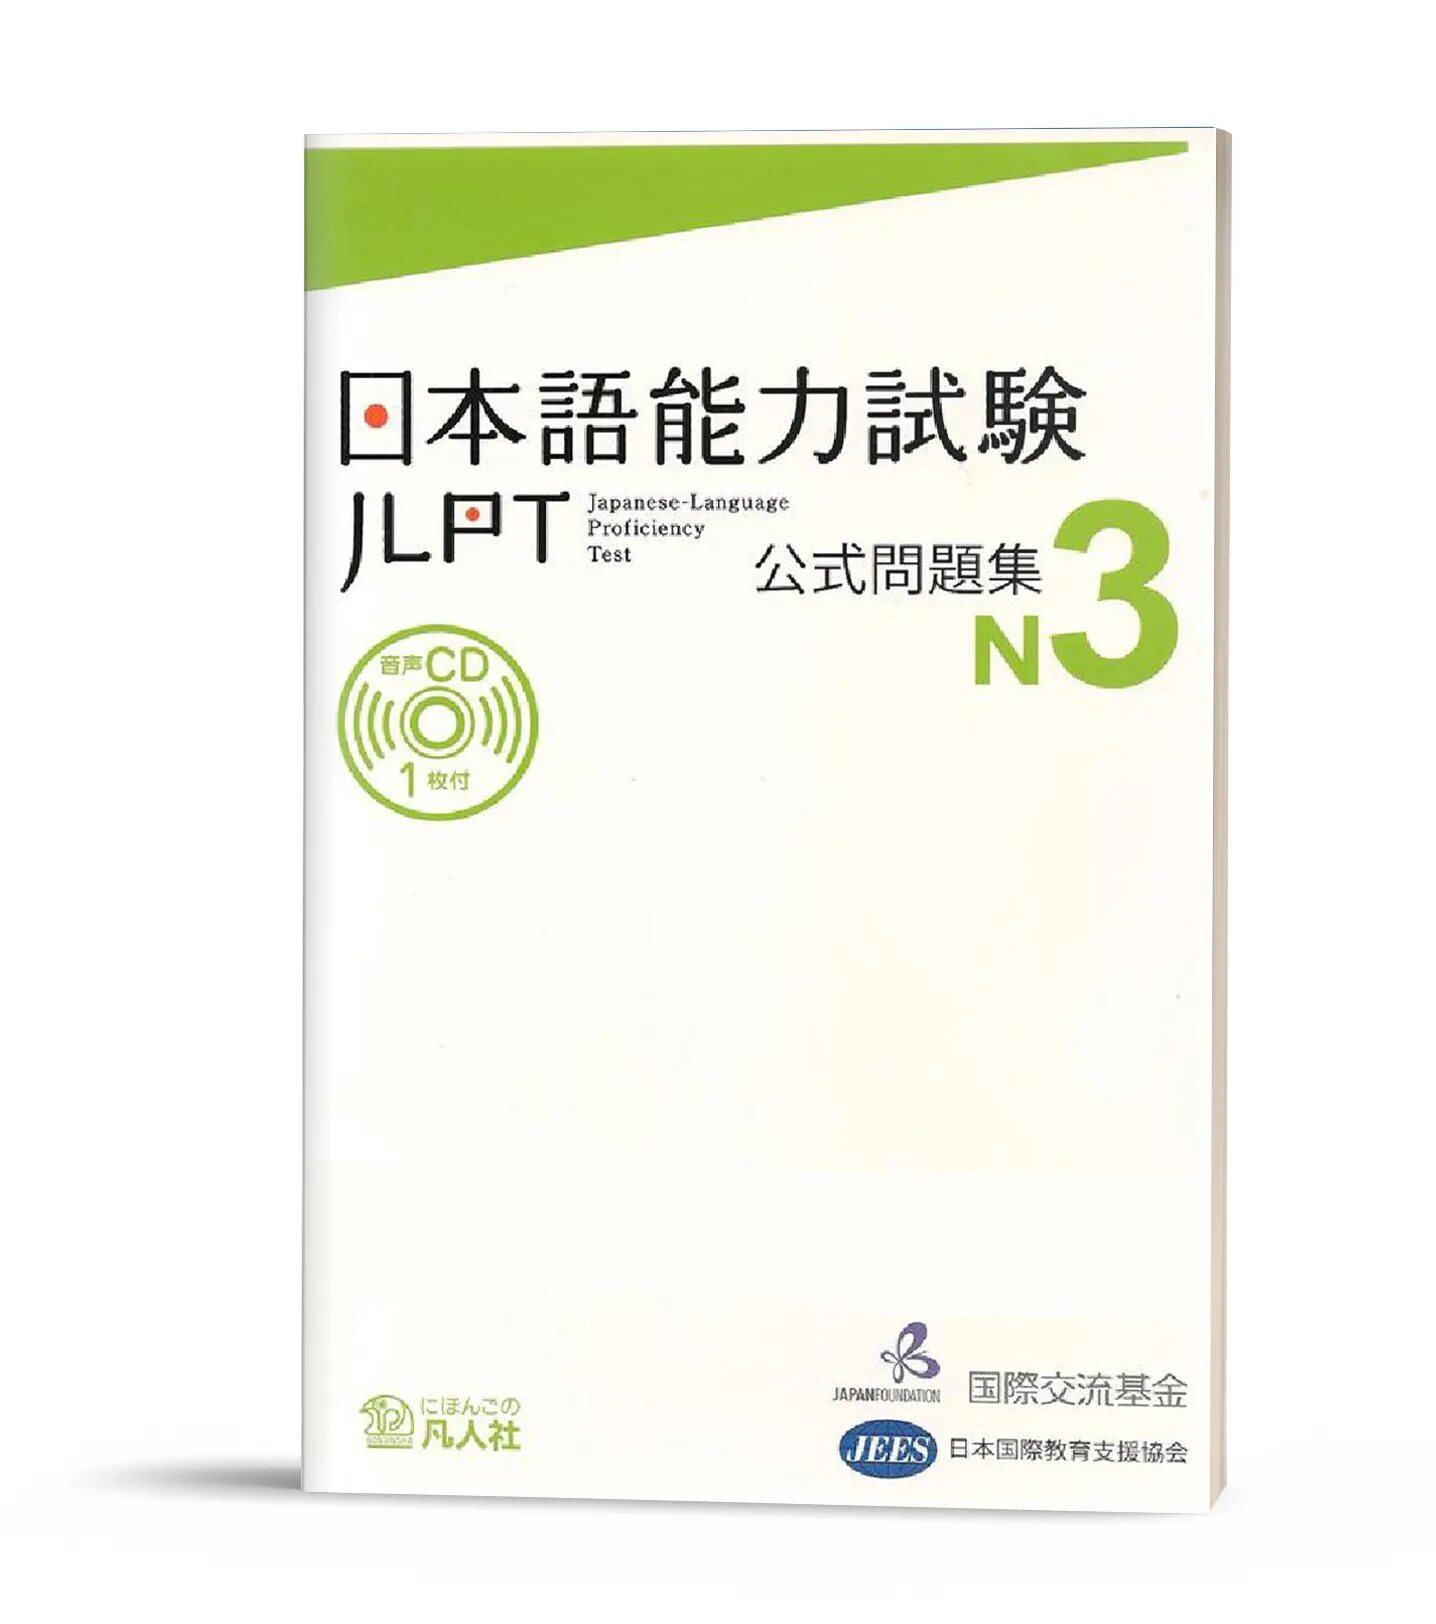 Нихонго нореку сикэн. Japanese language Proficiency Test (JLPT).. JLPT n3. Экзамена JLPT. Японский язык тест.